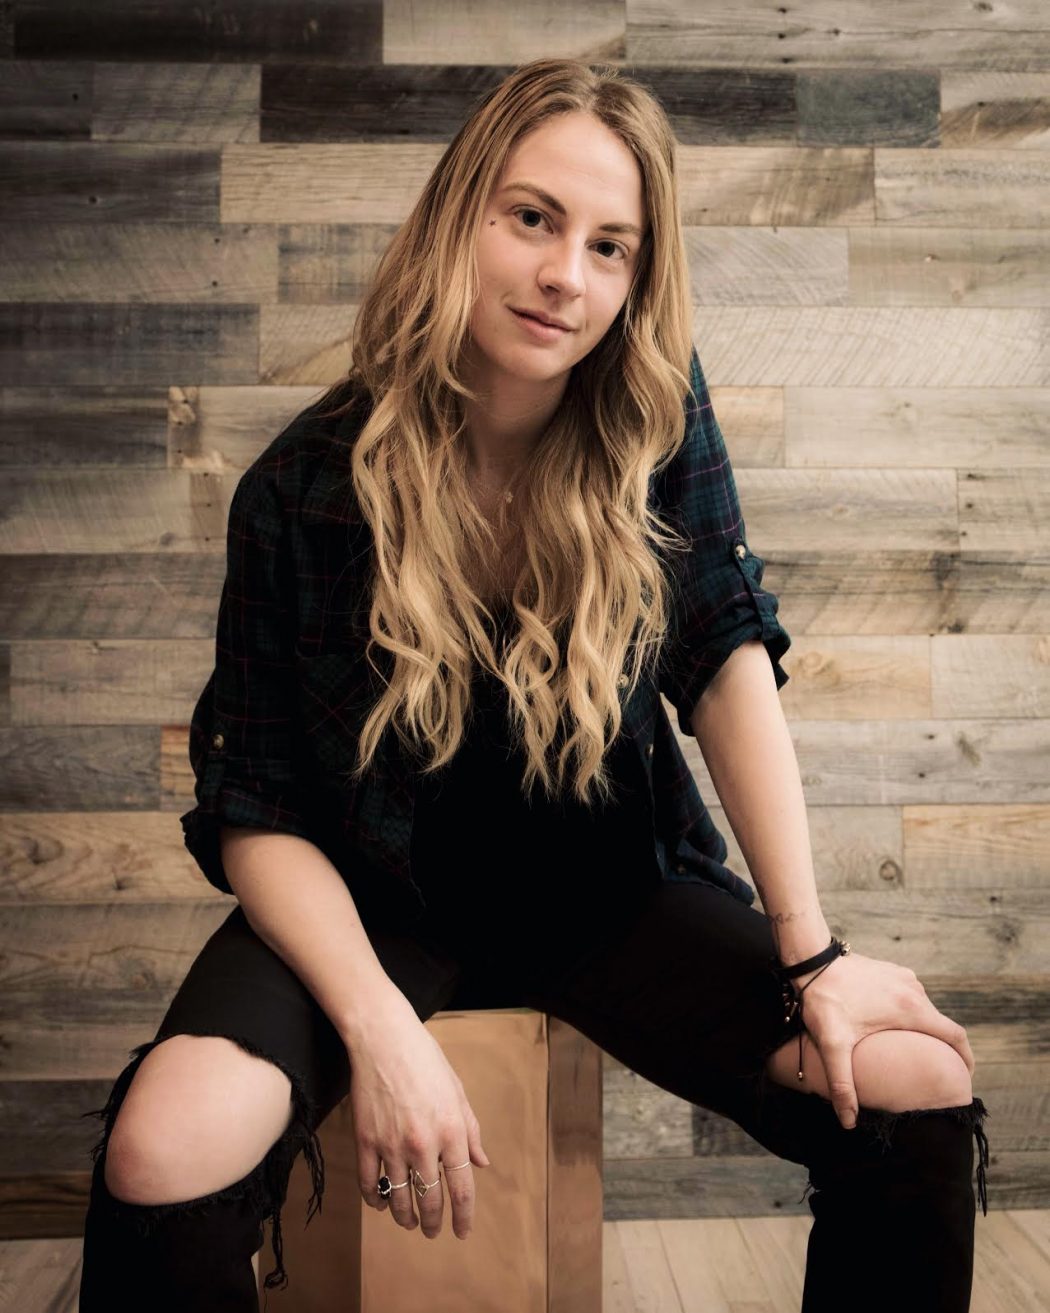 Heyley wearing black sits on a block of wood